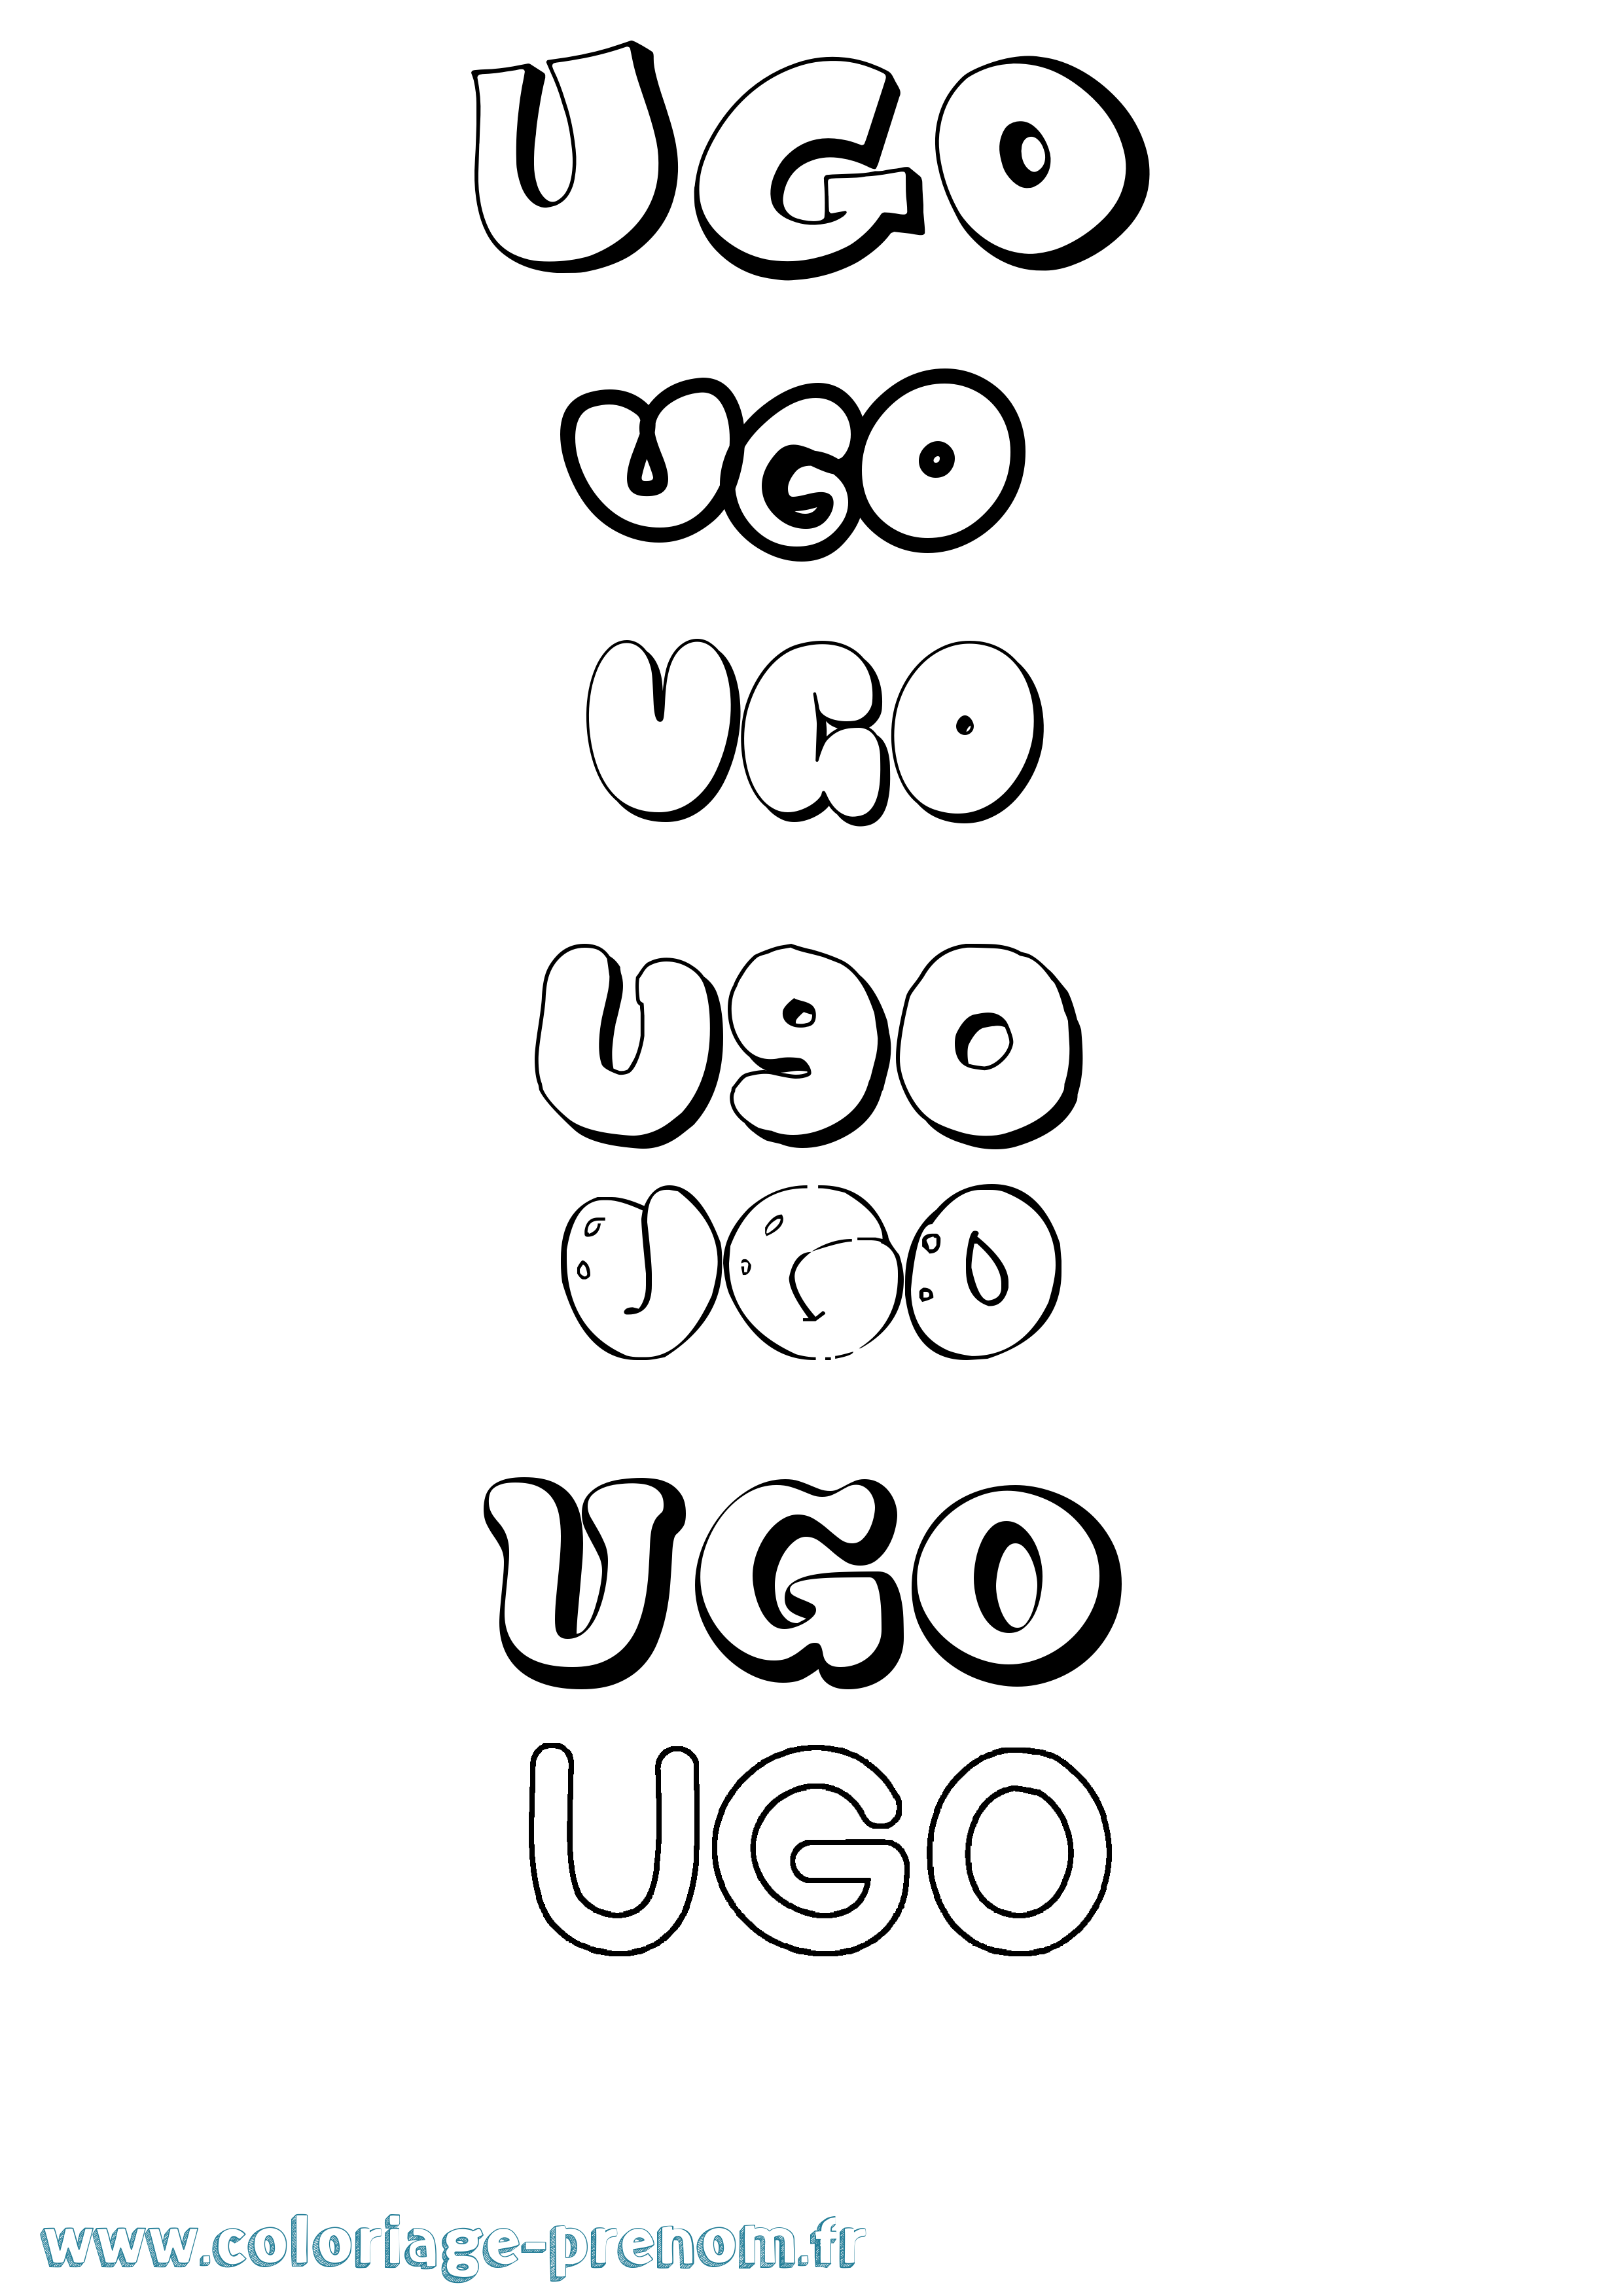 Coloriage prénom Ugo Bubble